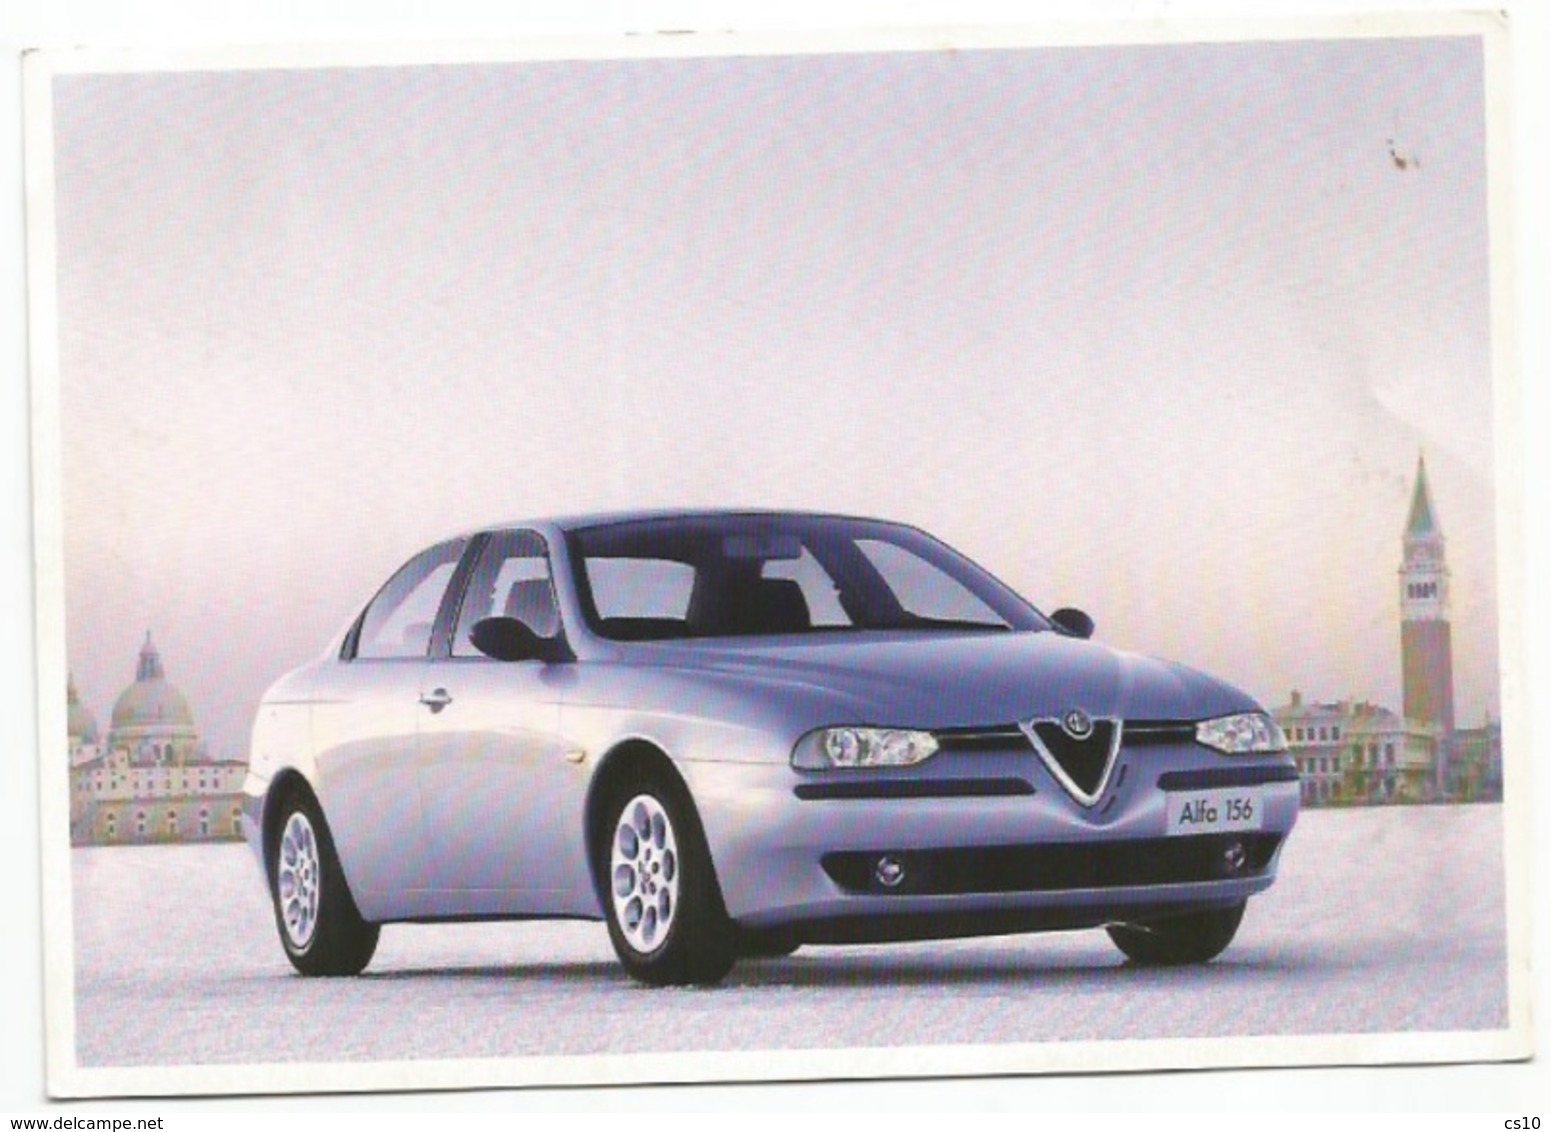 Car Mobile Automobile Alfa Romeo "156" Official By FIAT Advertising Promo Pcard Torino 14oct1997 To Milano - Turismo